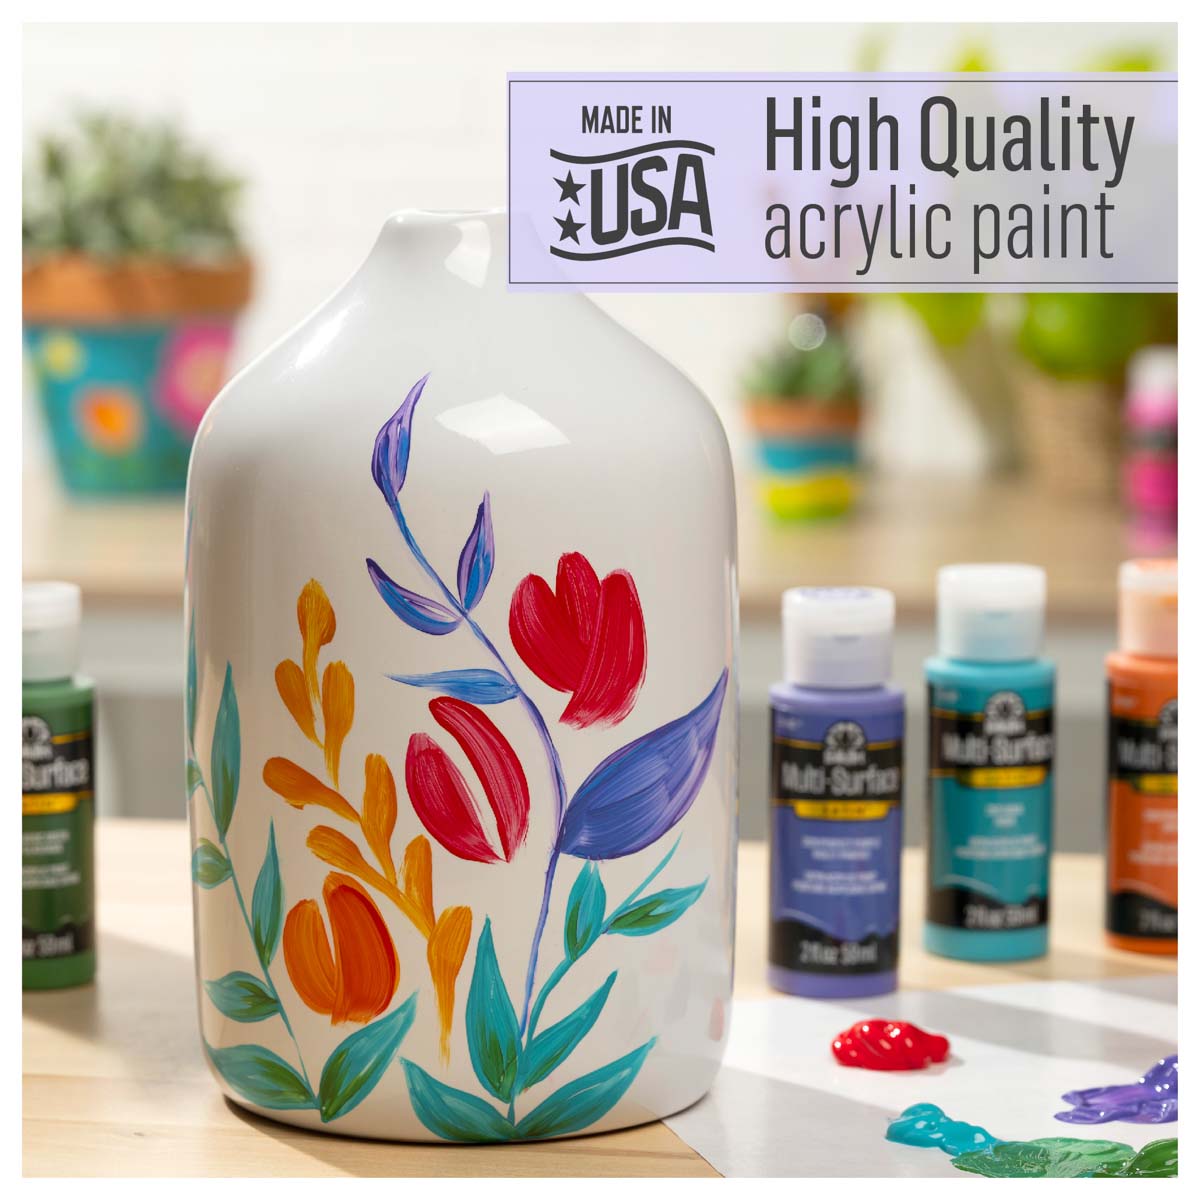 FolkArt ® Multi-Surface Satin Acrylic Paints - Skyline, 2 oz. - 2979